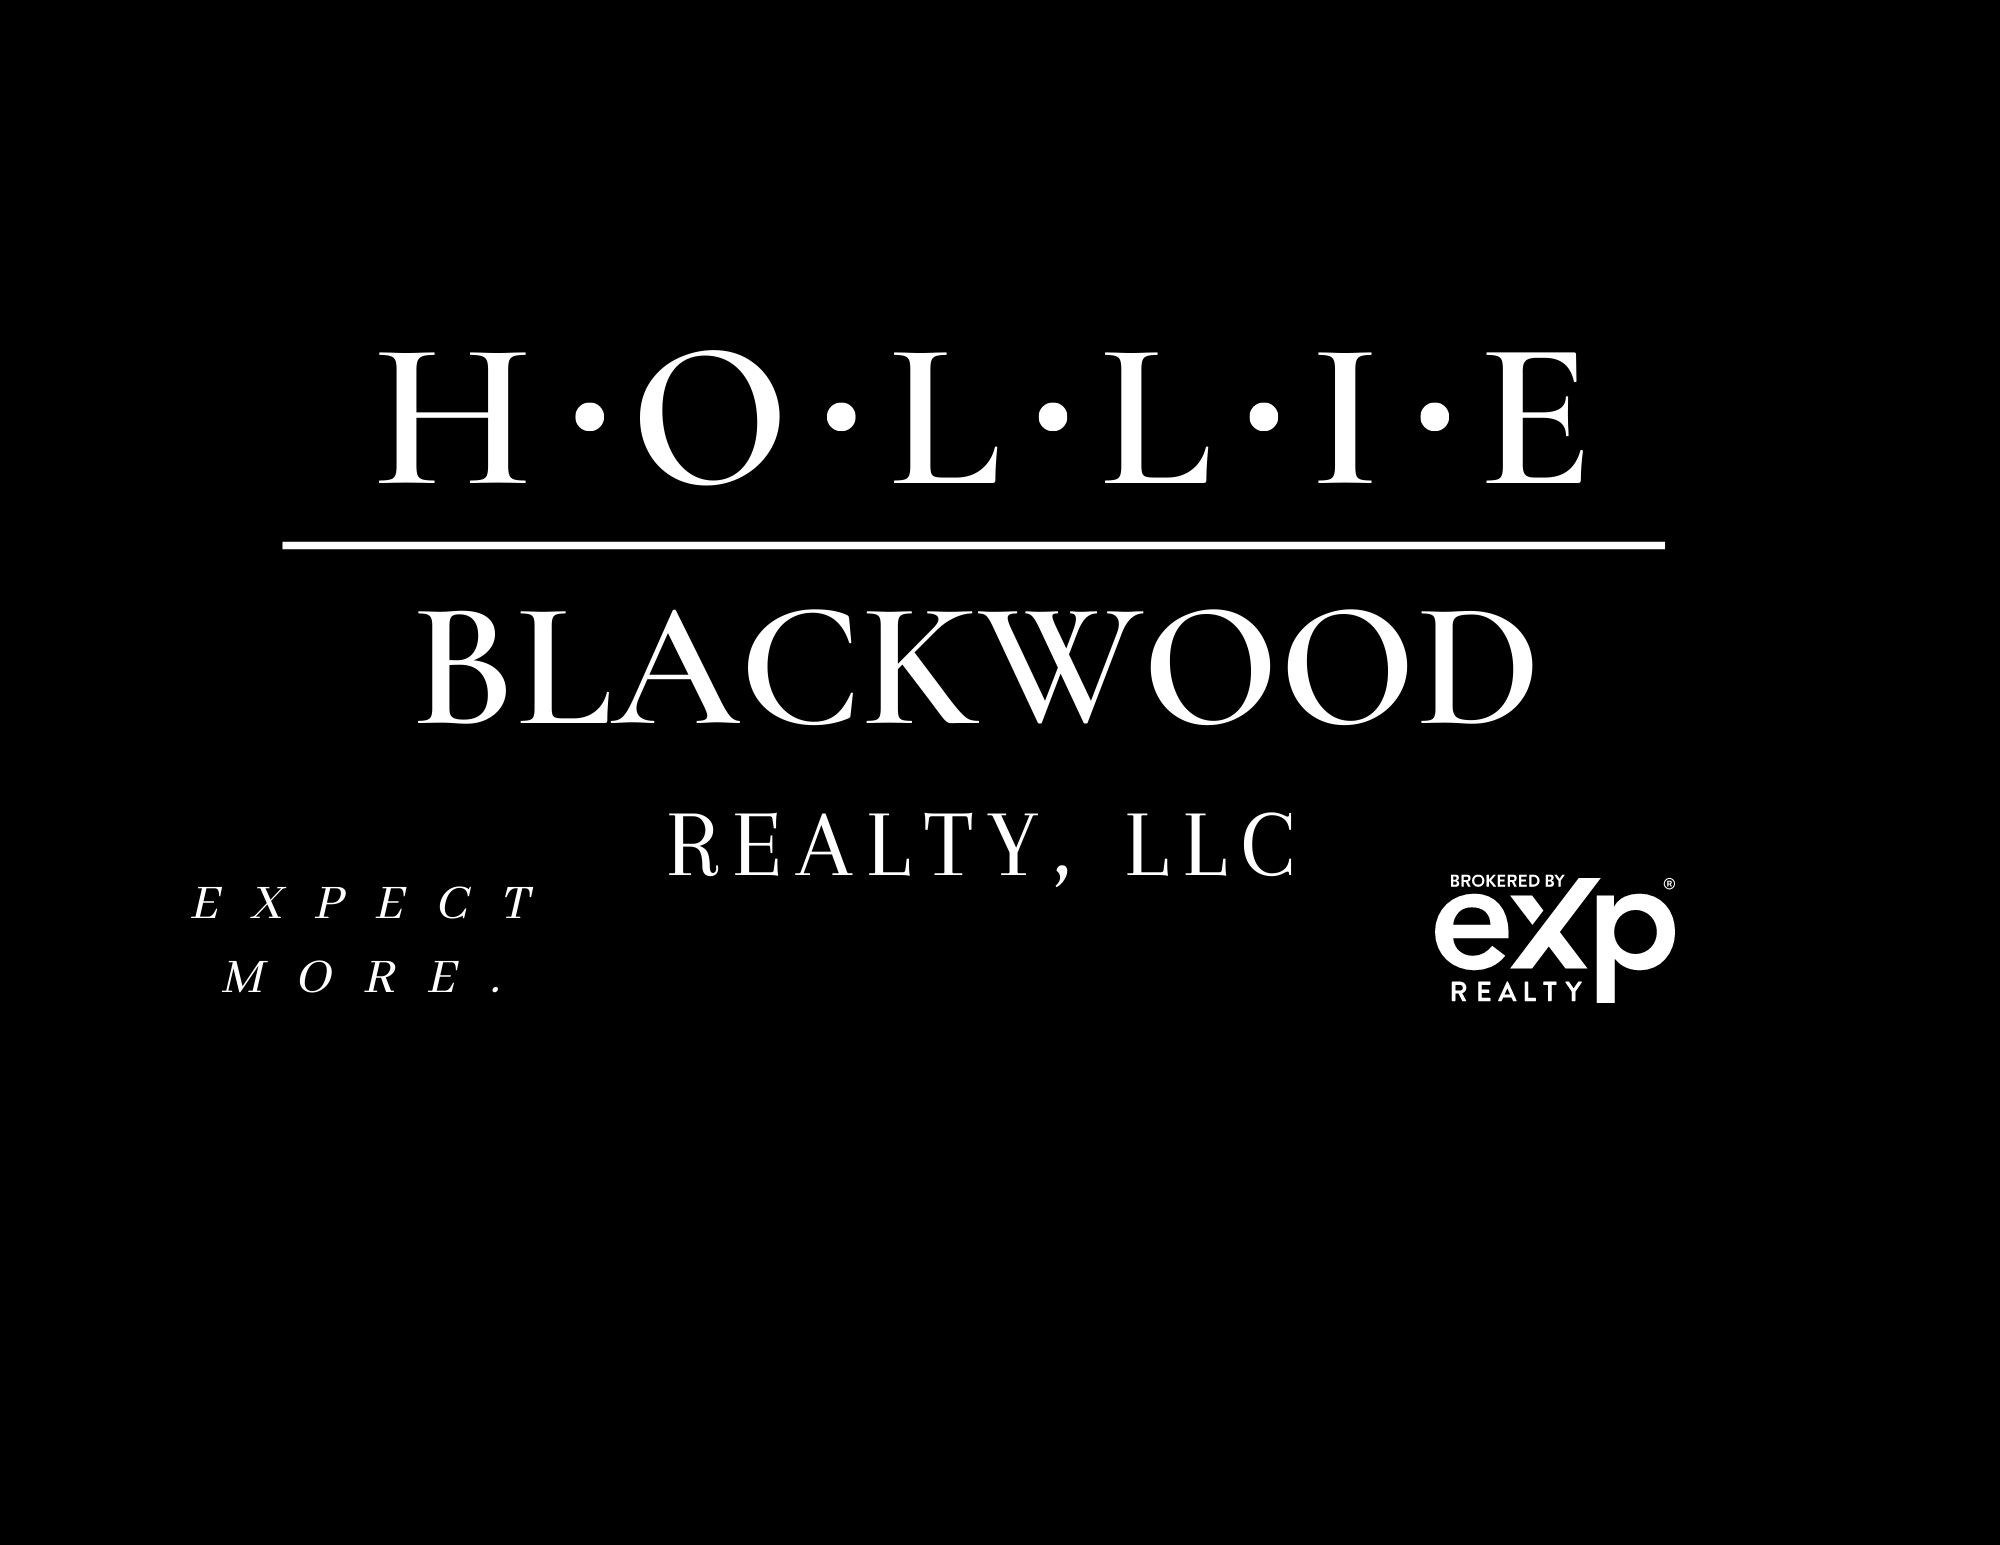 6Hollie Blackwood Realty